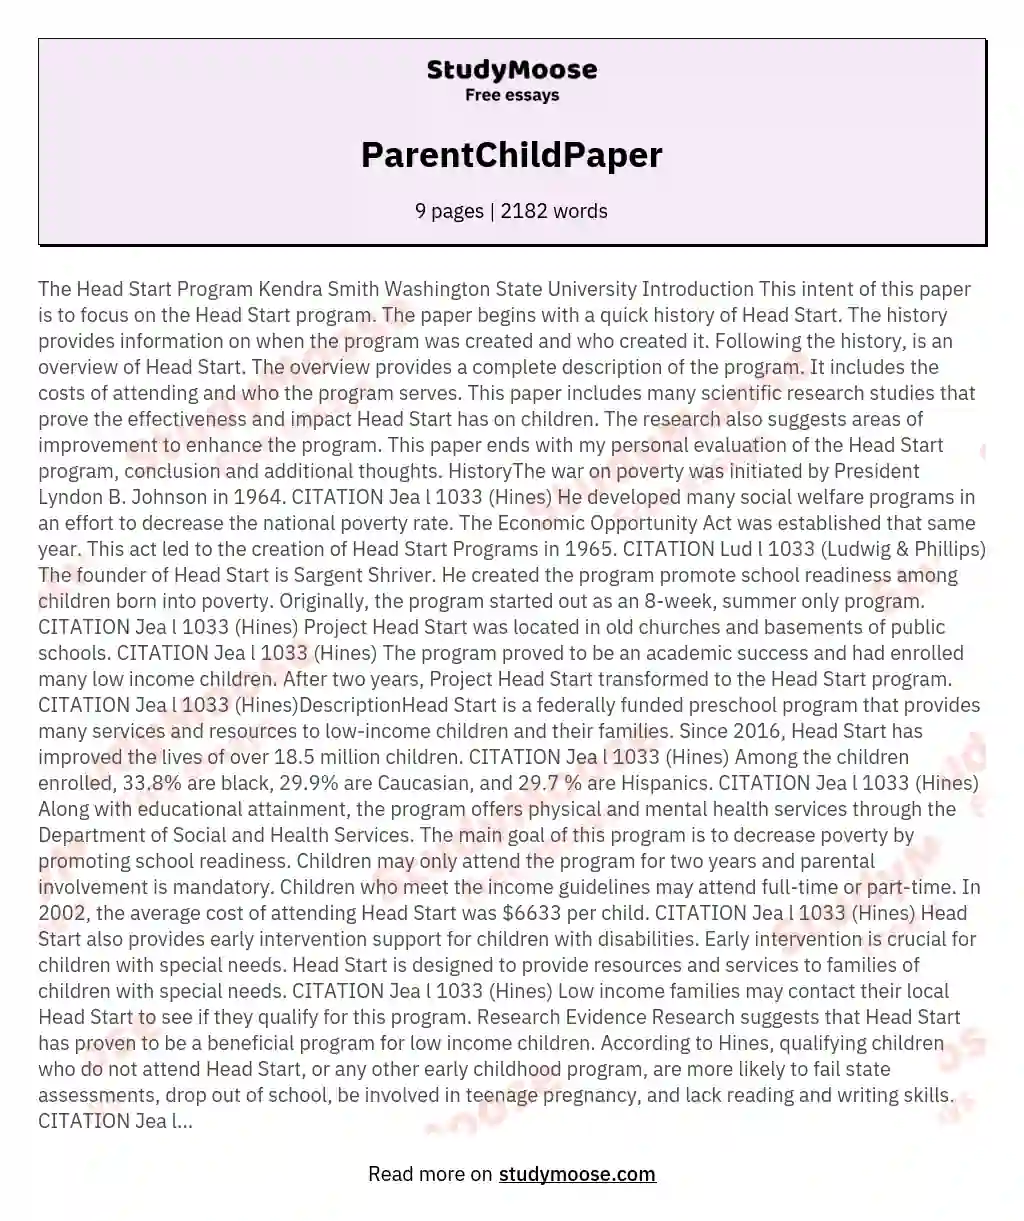 ParentChildPaper essay